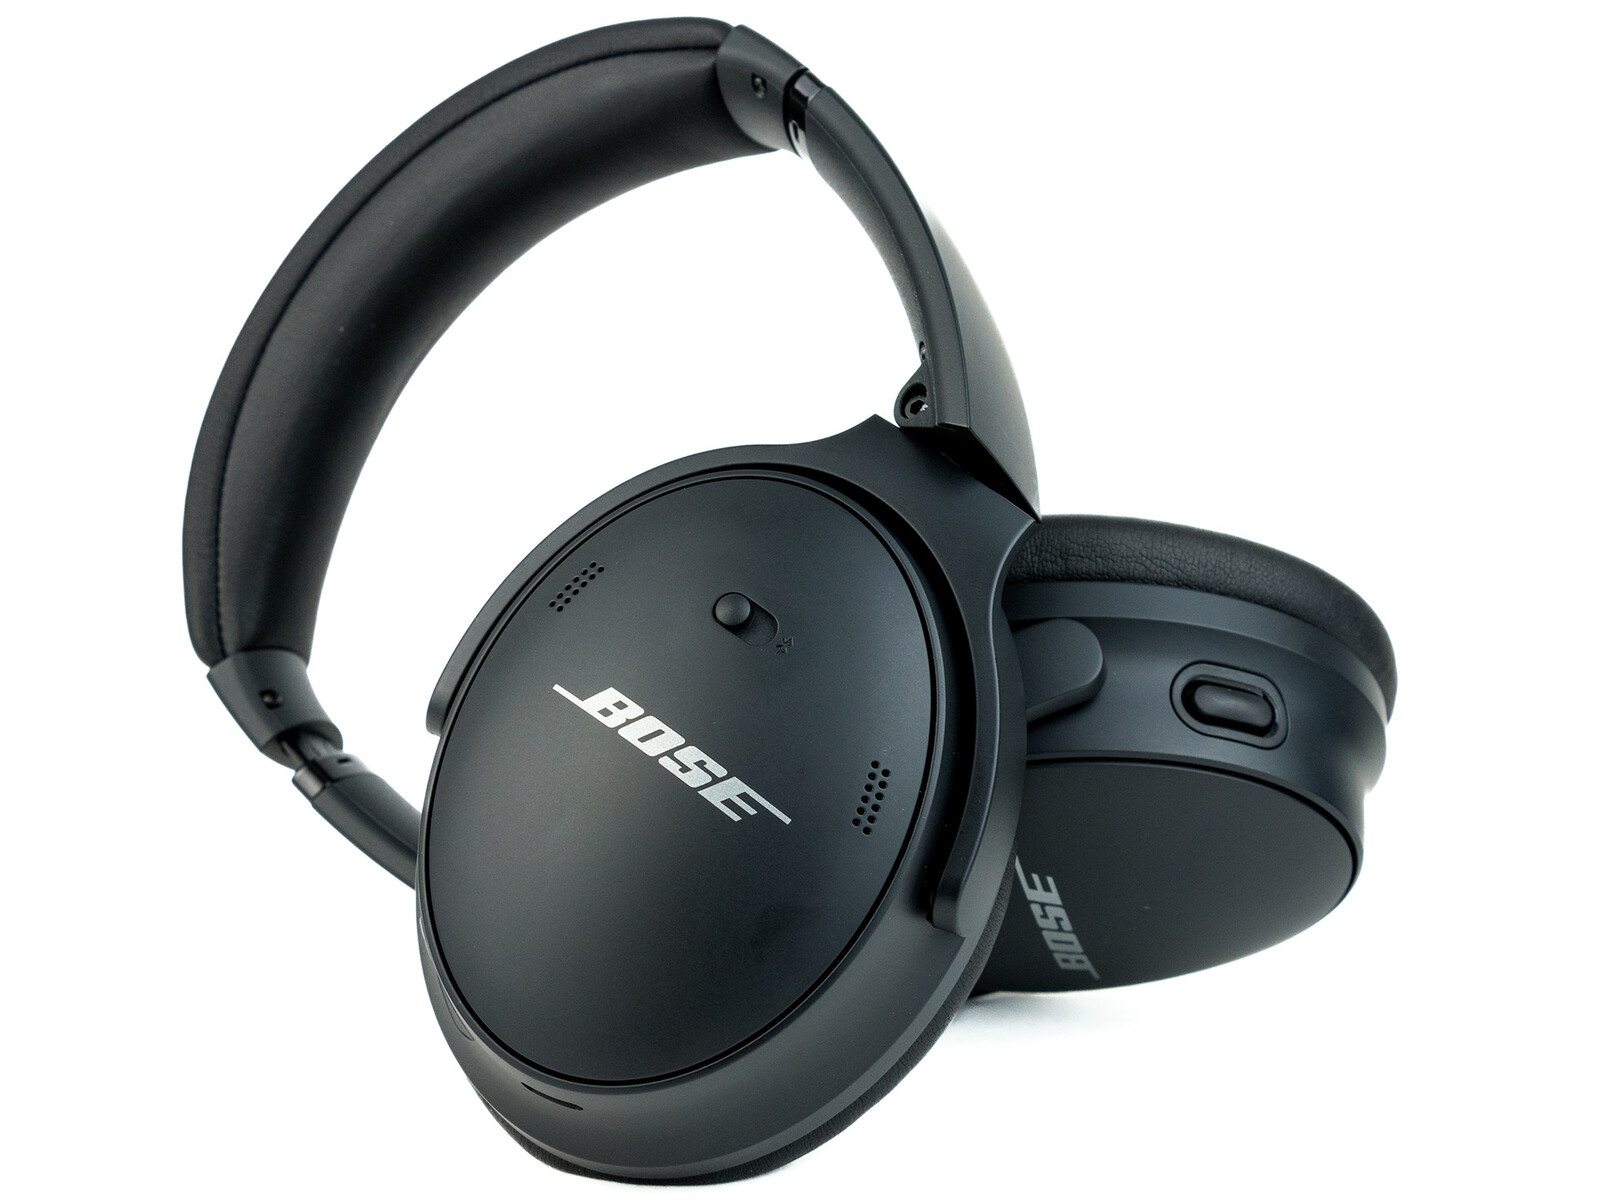 Bose QuietComfort 45 Bluetooth Wireless Noise Cancelling Headphones - QC45  Headphone